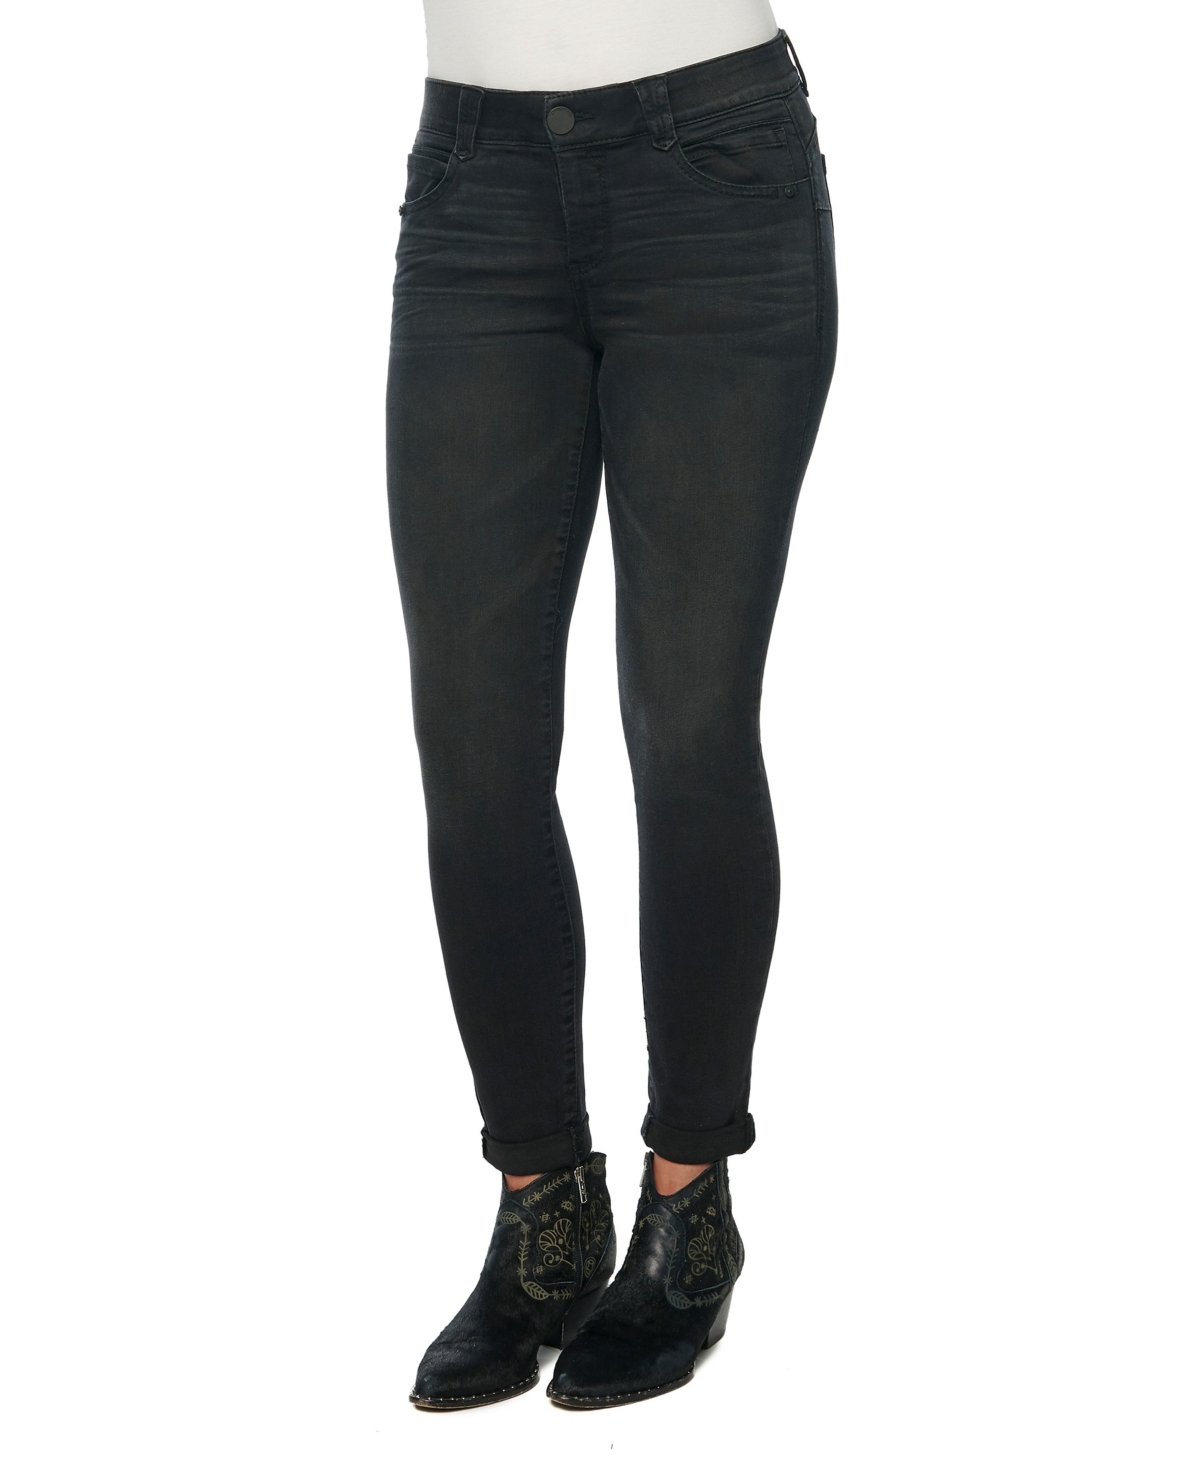 Women's "Ab"Solution Ankle Skimmer Jeans - Black